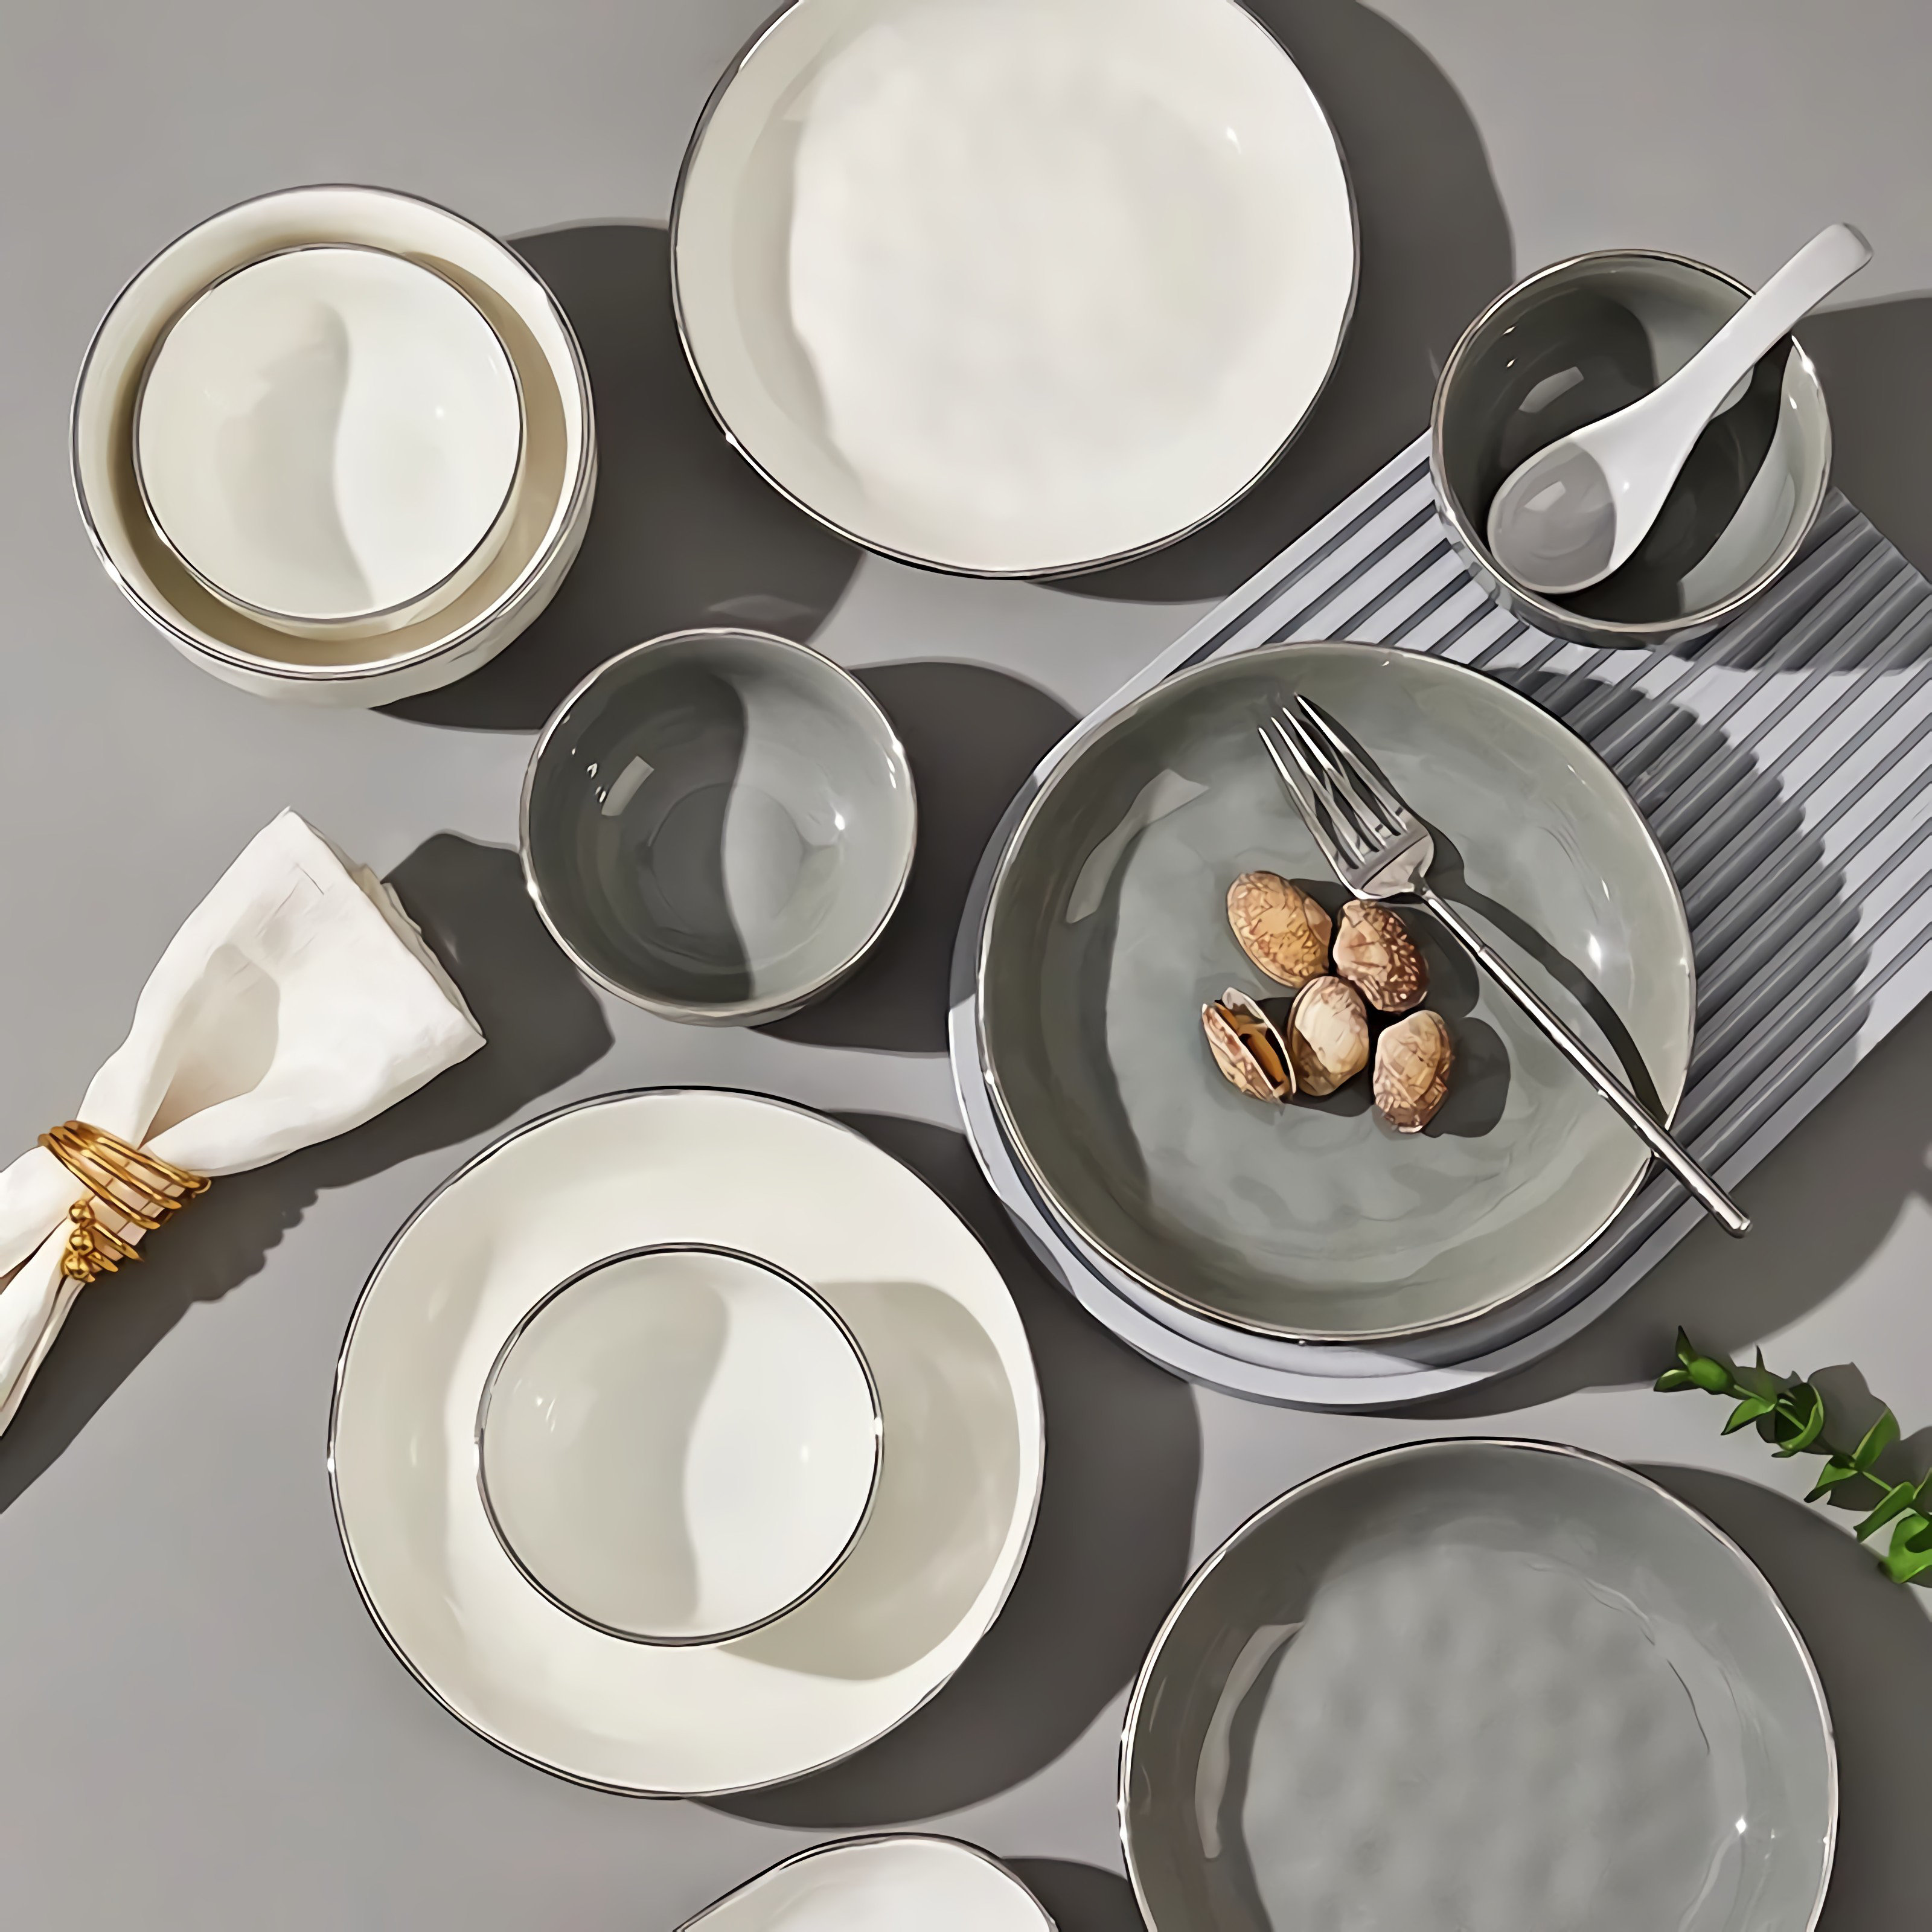 MALACASA, Series Flora, 12-Piece Porcelain Cereal Bowl Dinnerware Set,  Ivory White Dinner Set, 5.75